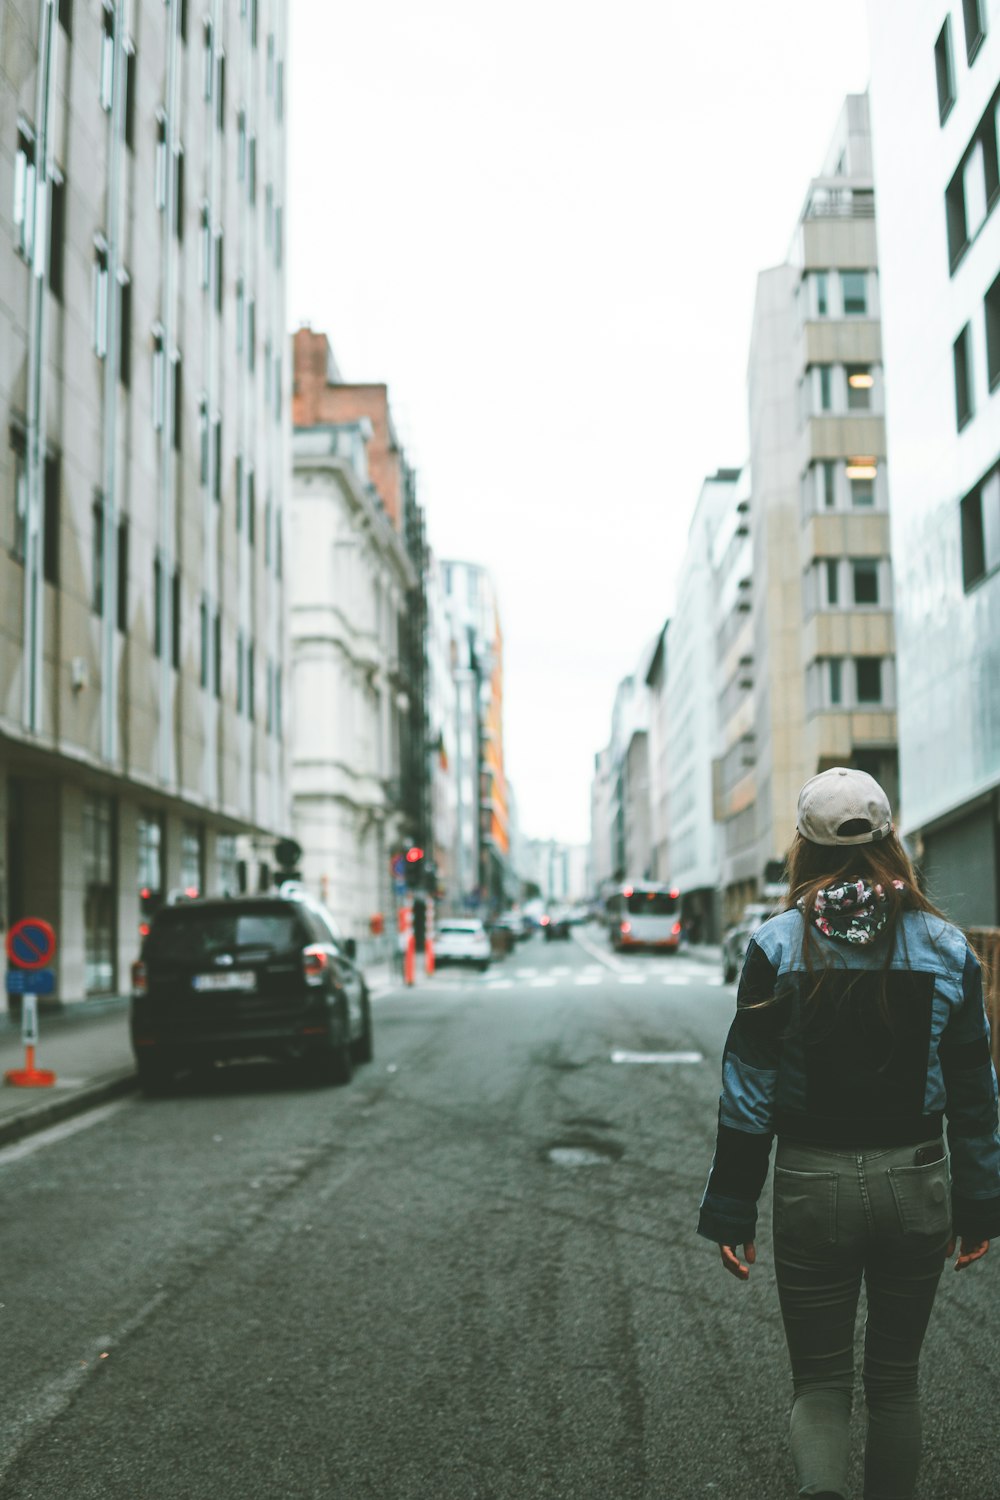 a woman walking down a street in a city